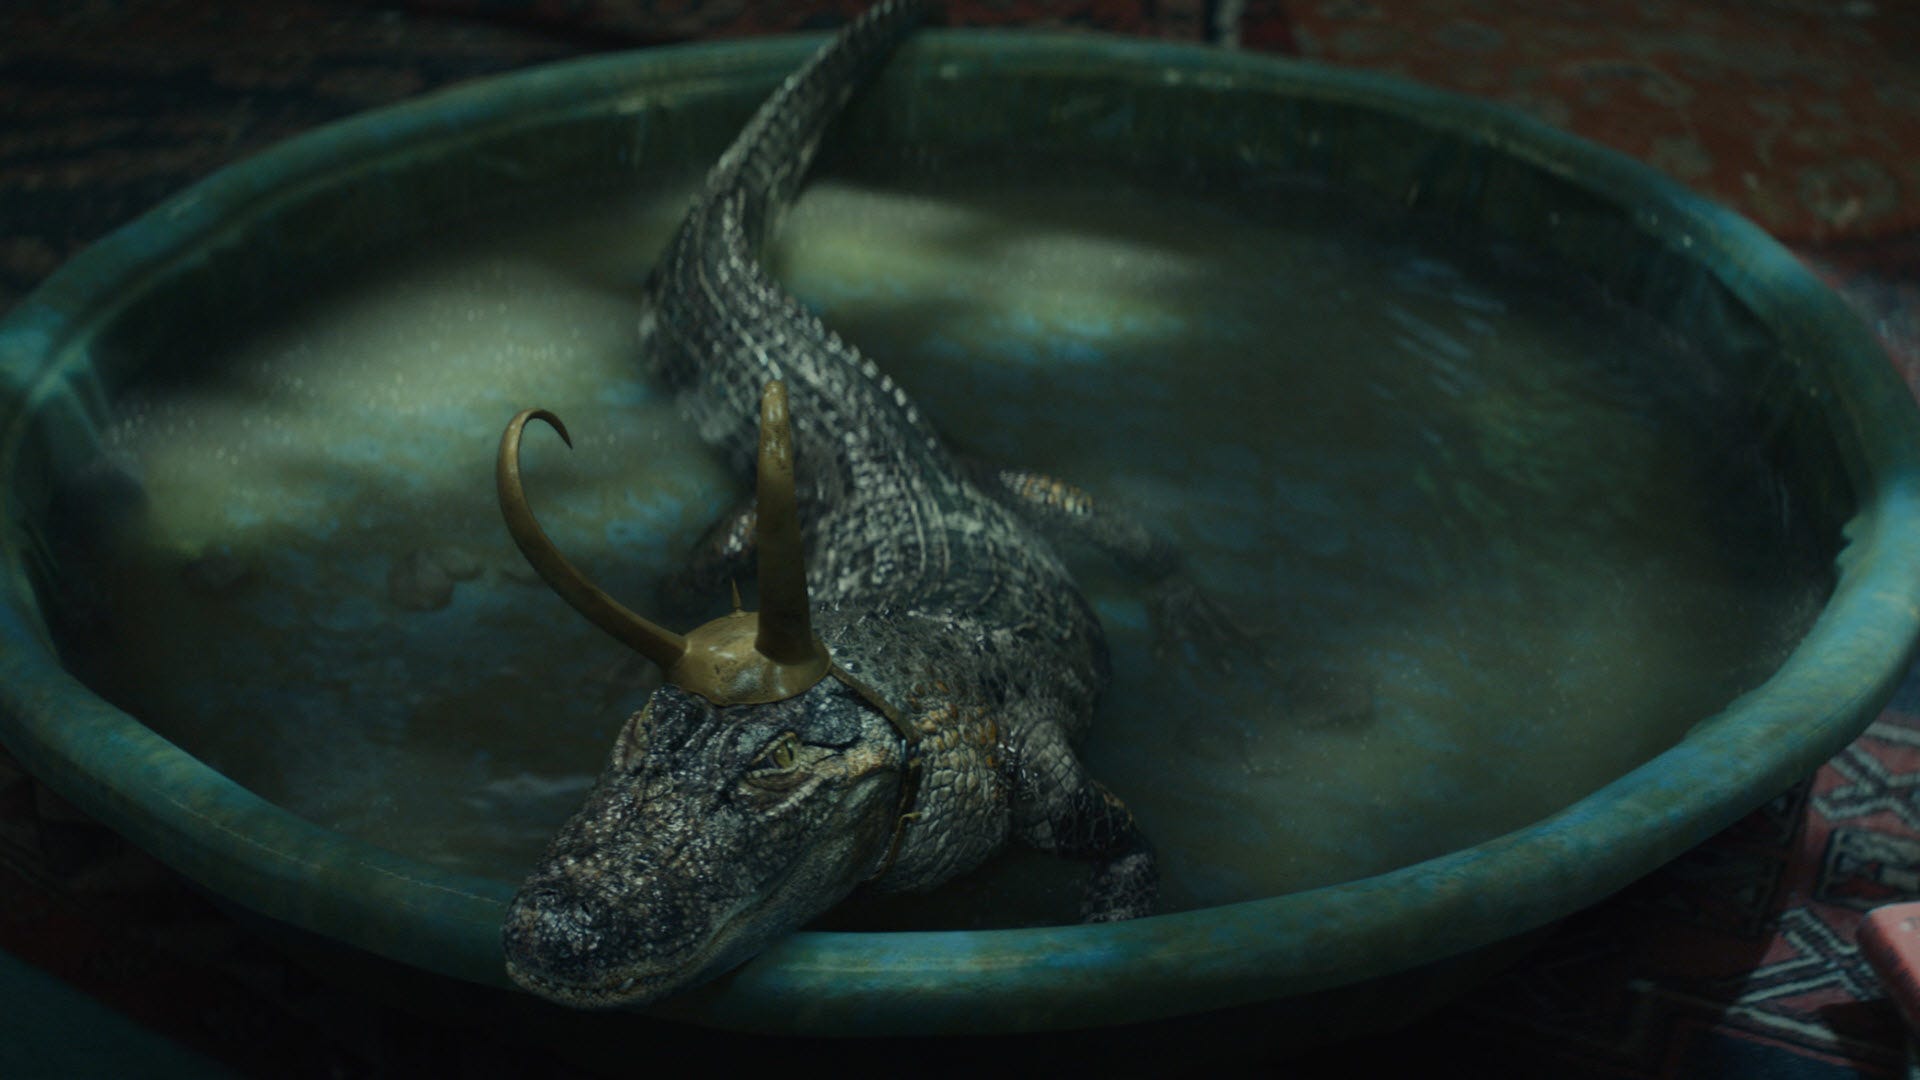 An Alligator Loki